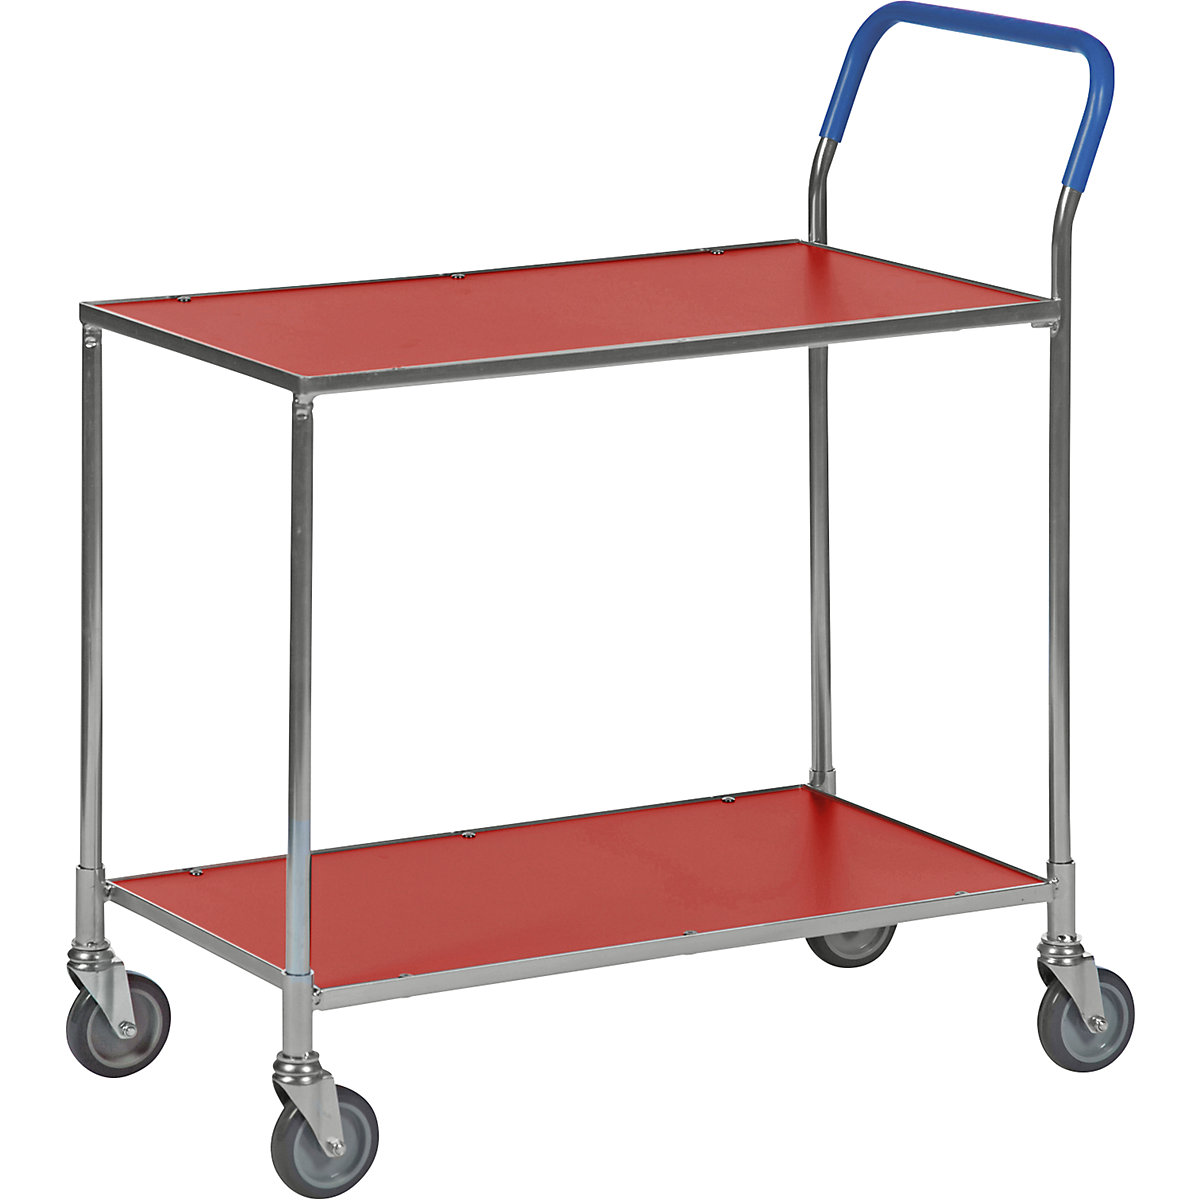 KOMFORT table trolley – Kongamek, red shelves, LxWxH 840 x 435 x 900 mm, 2+ items-11